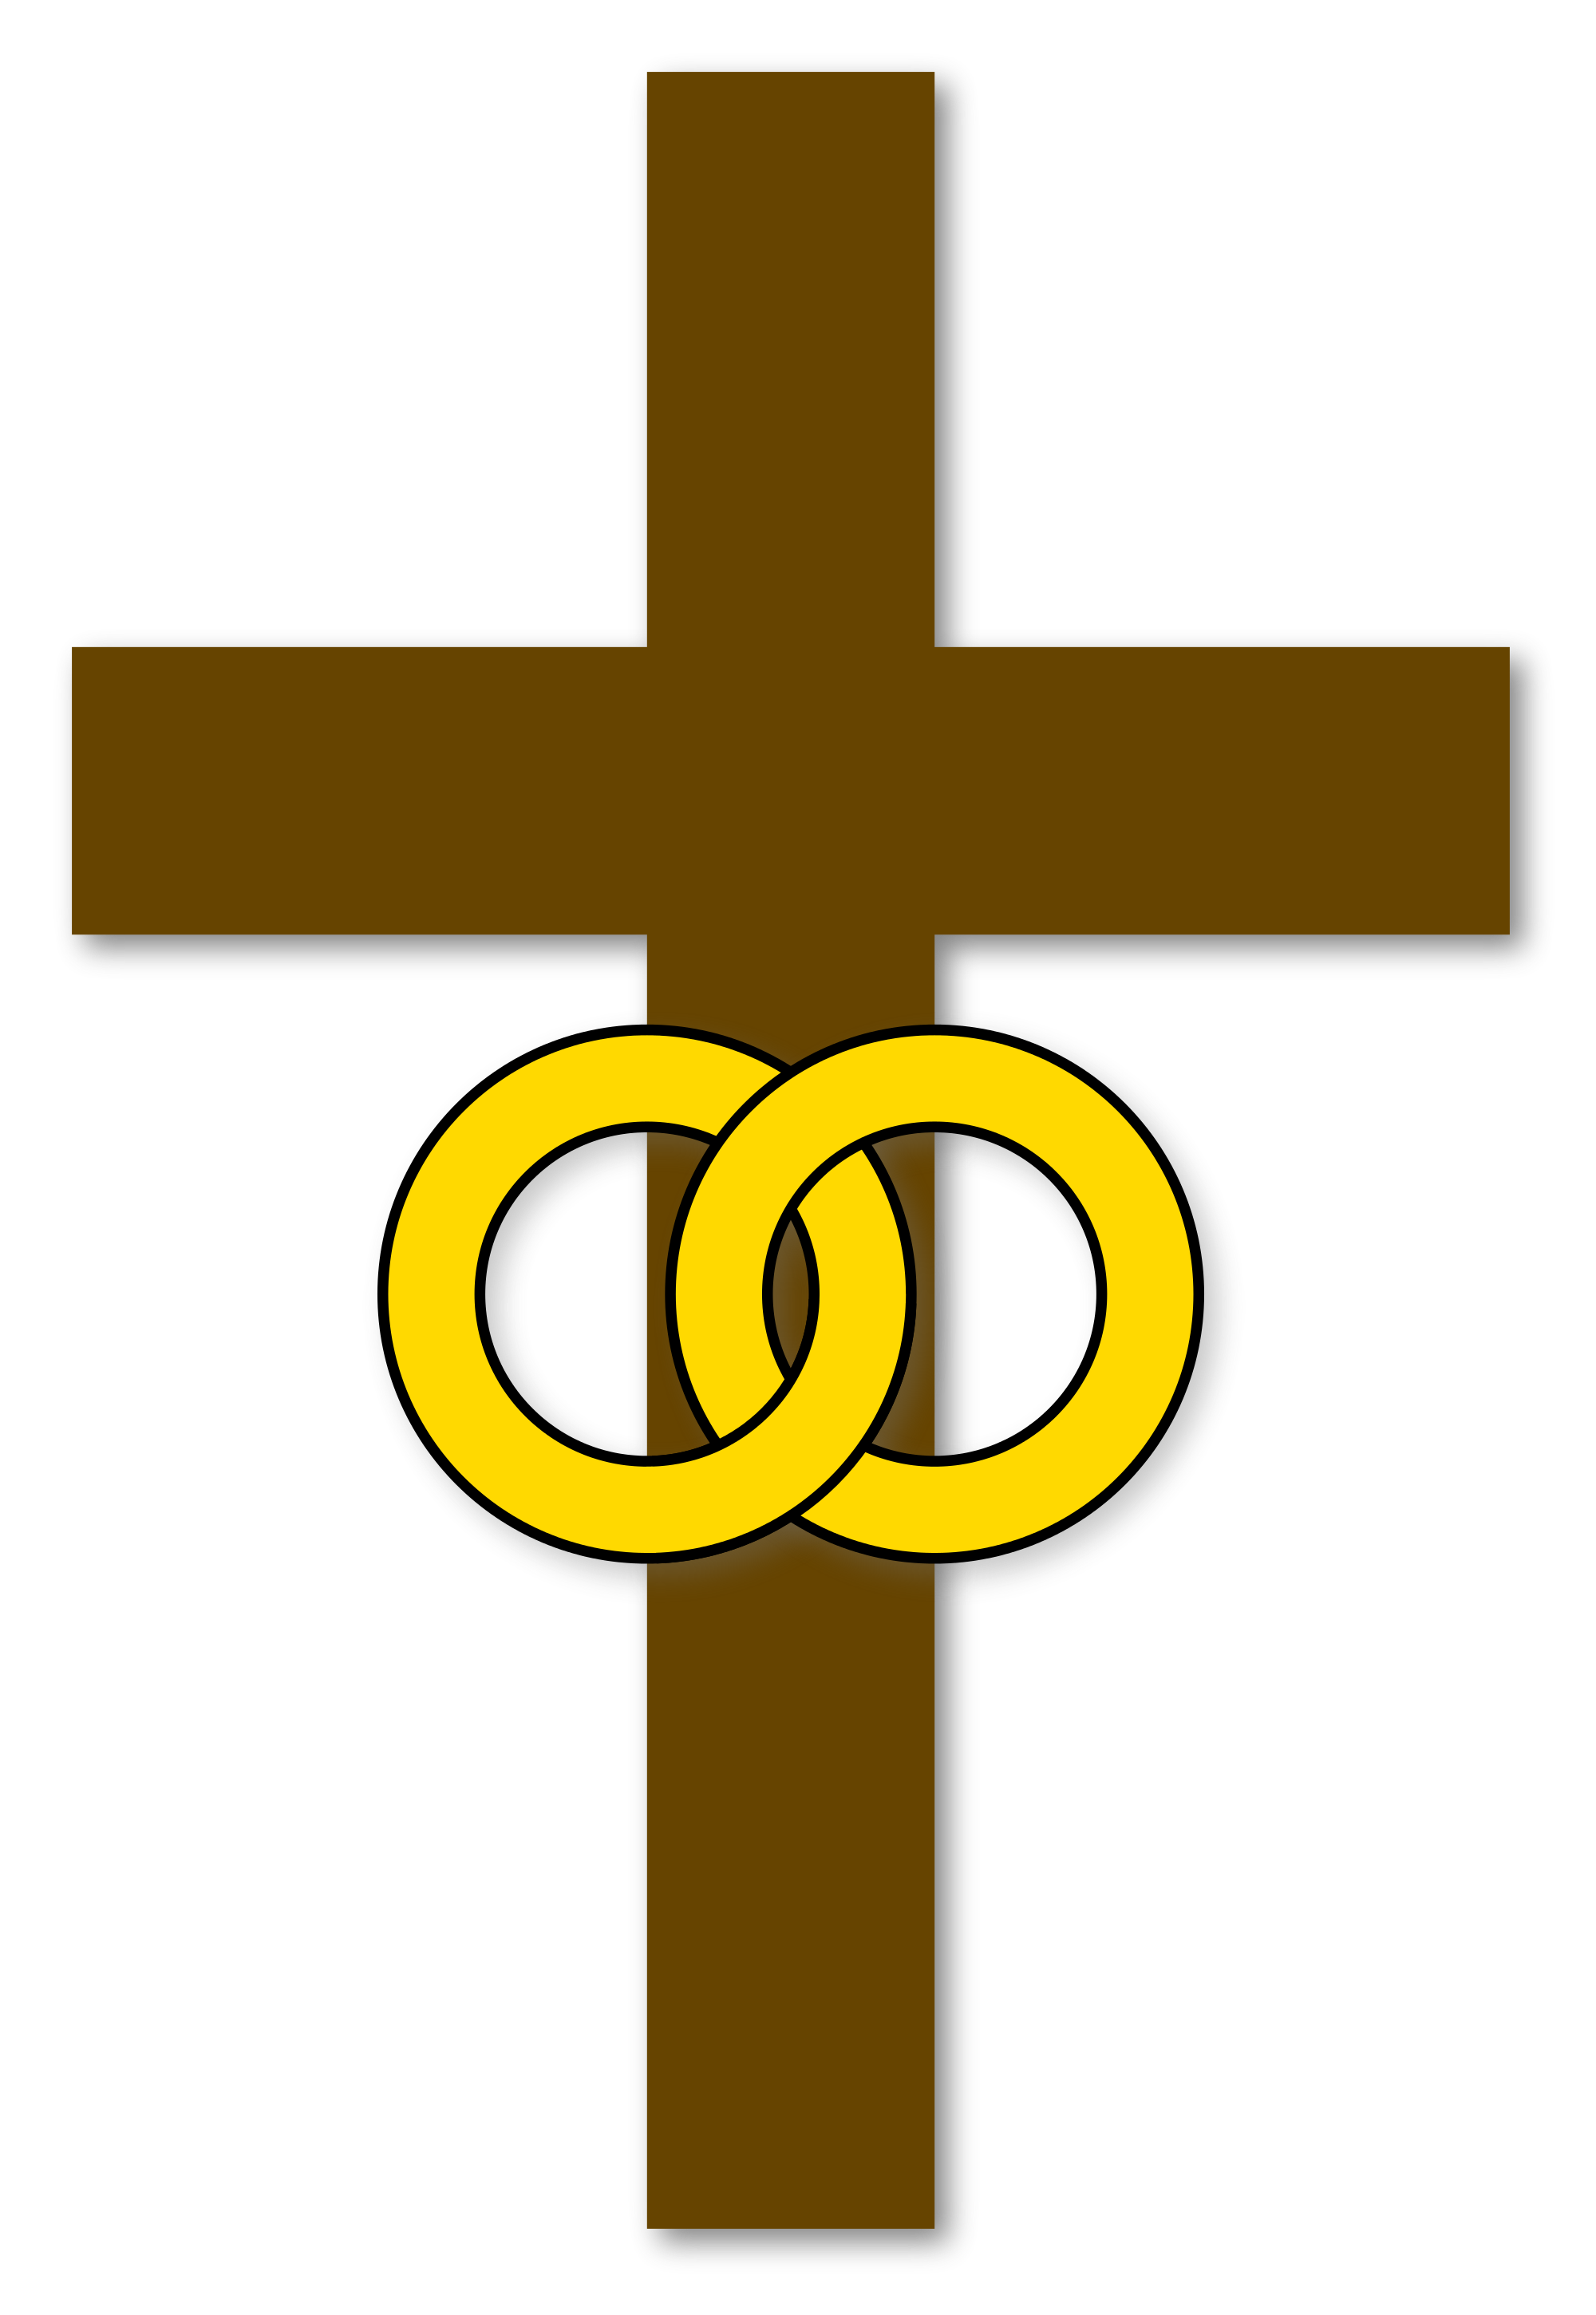 File:Marriage-cross-Christian-symbol.svg